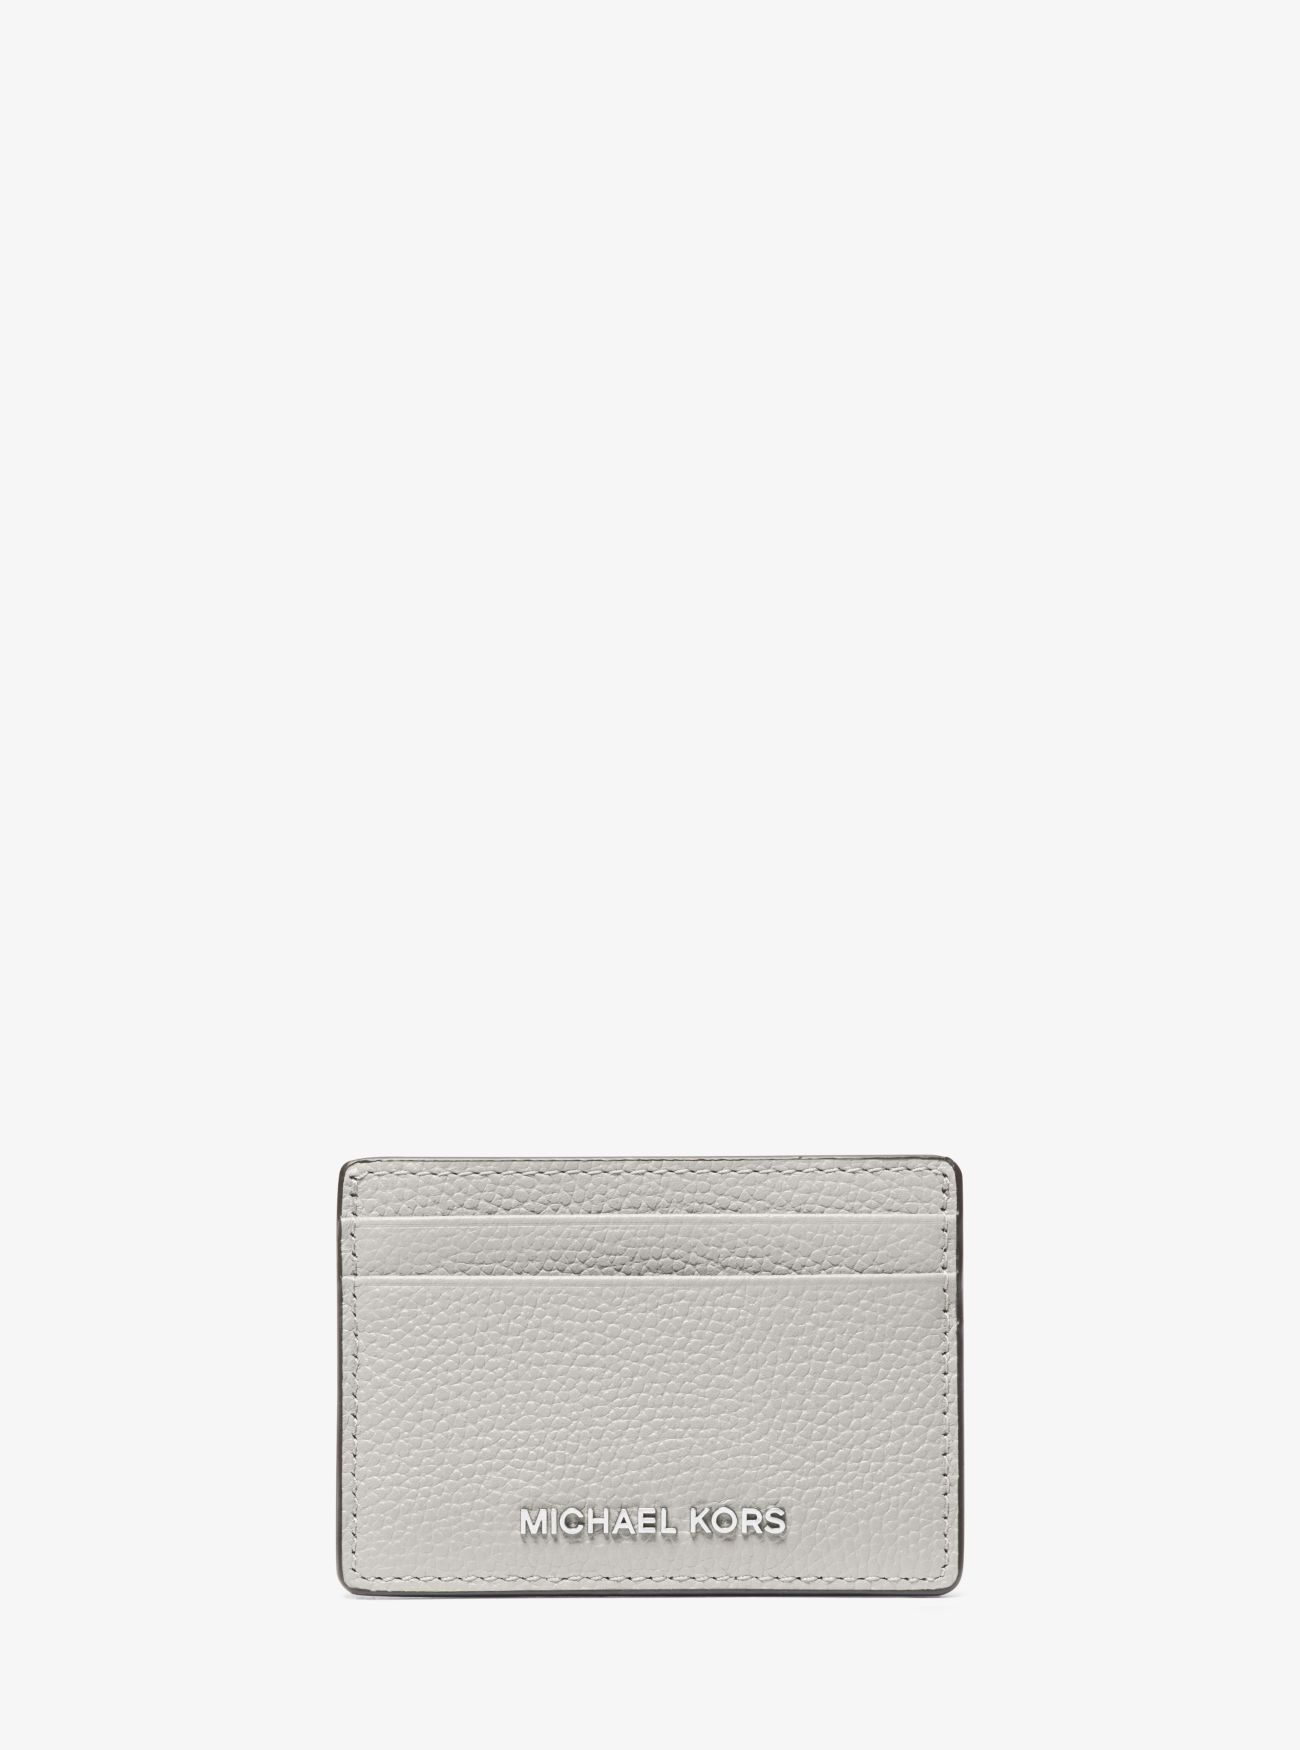 MK Pebbled Leather Card Case - Grey - Michael Kors